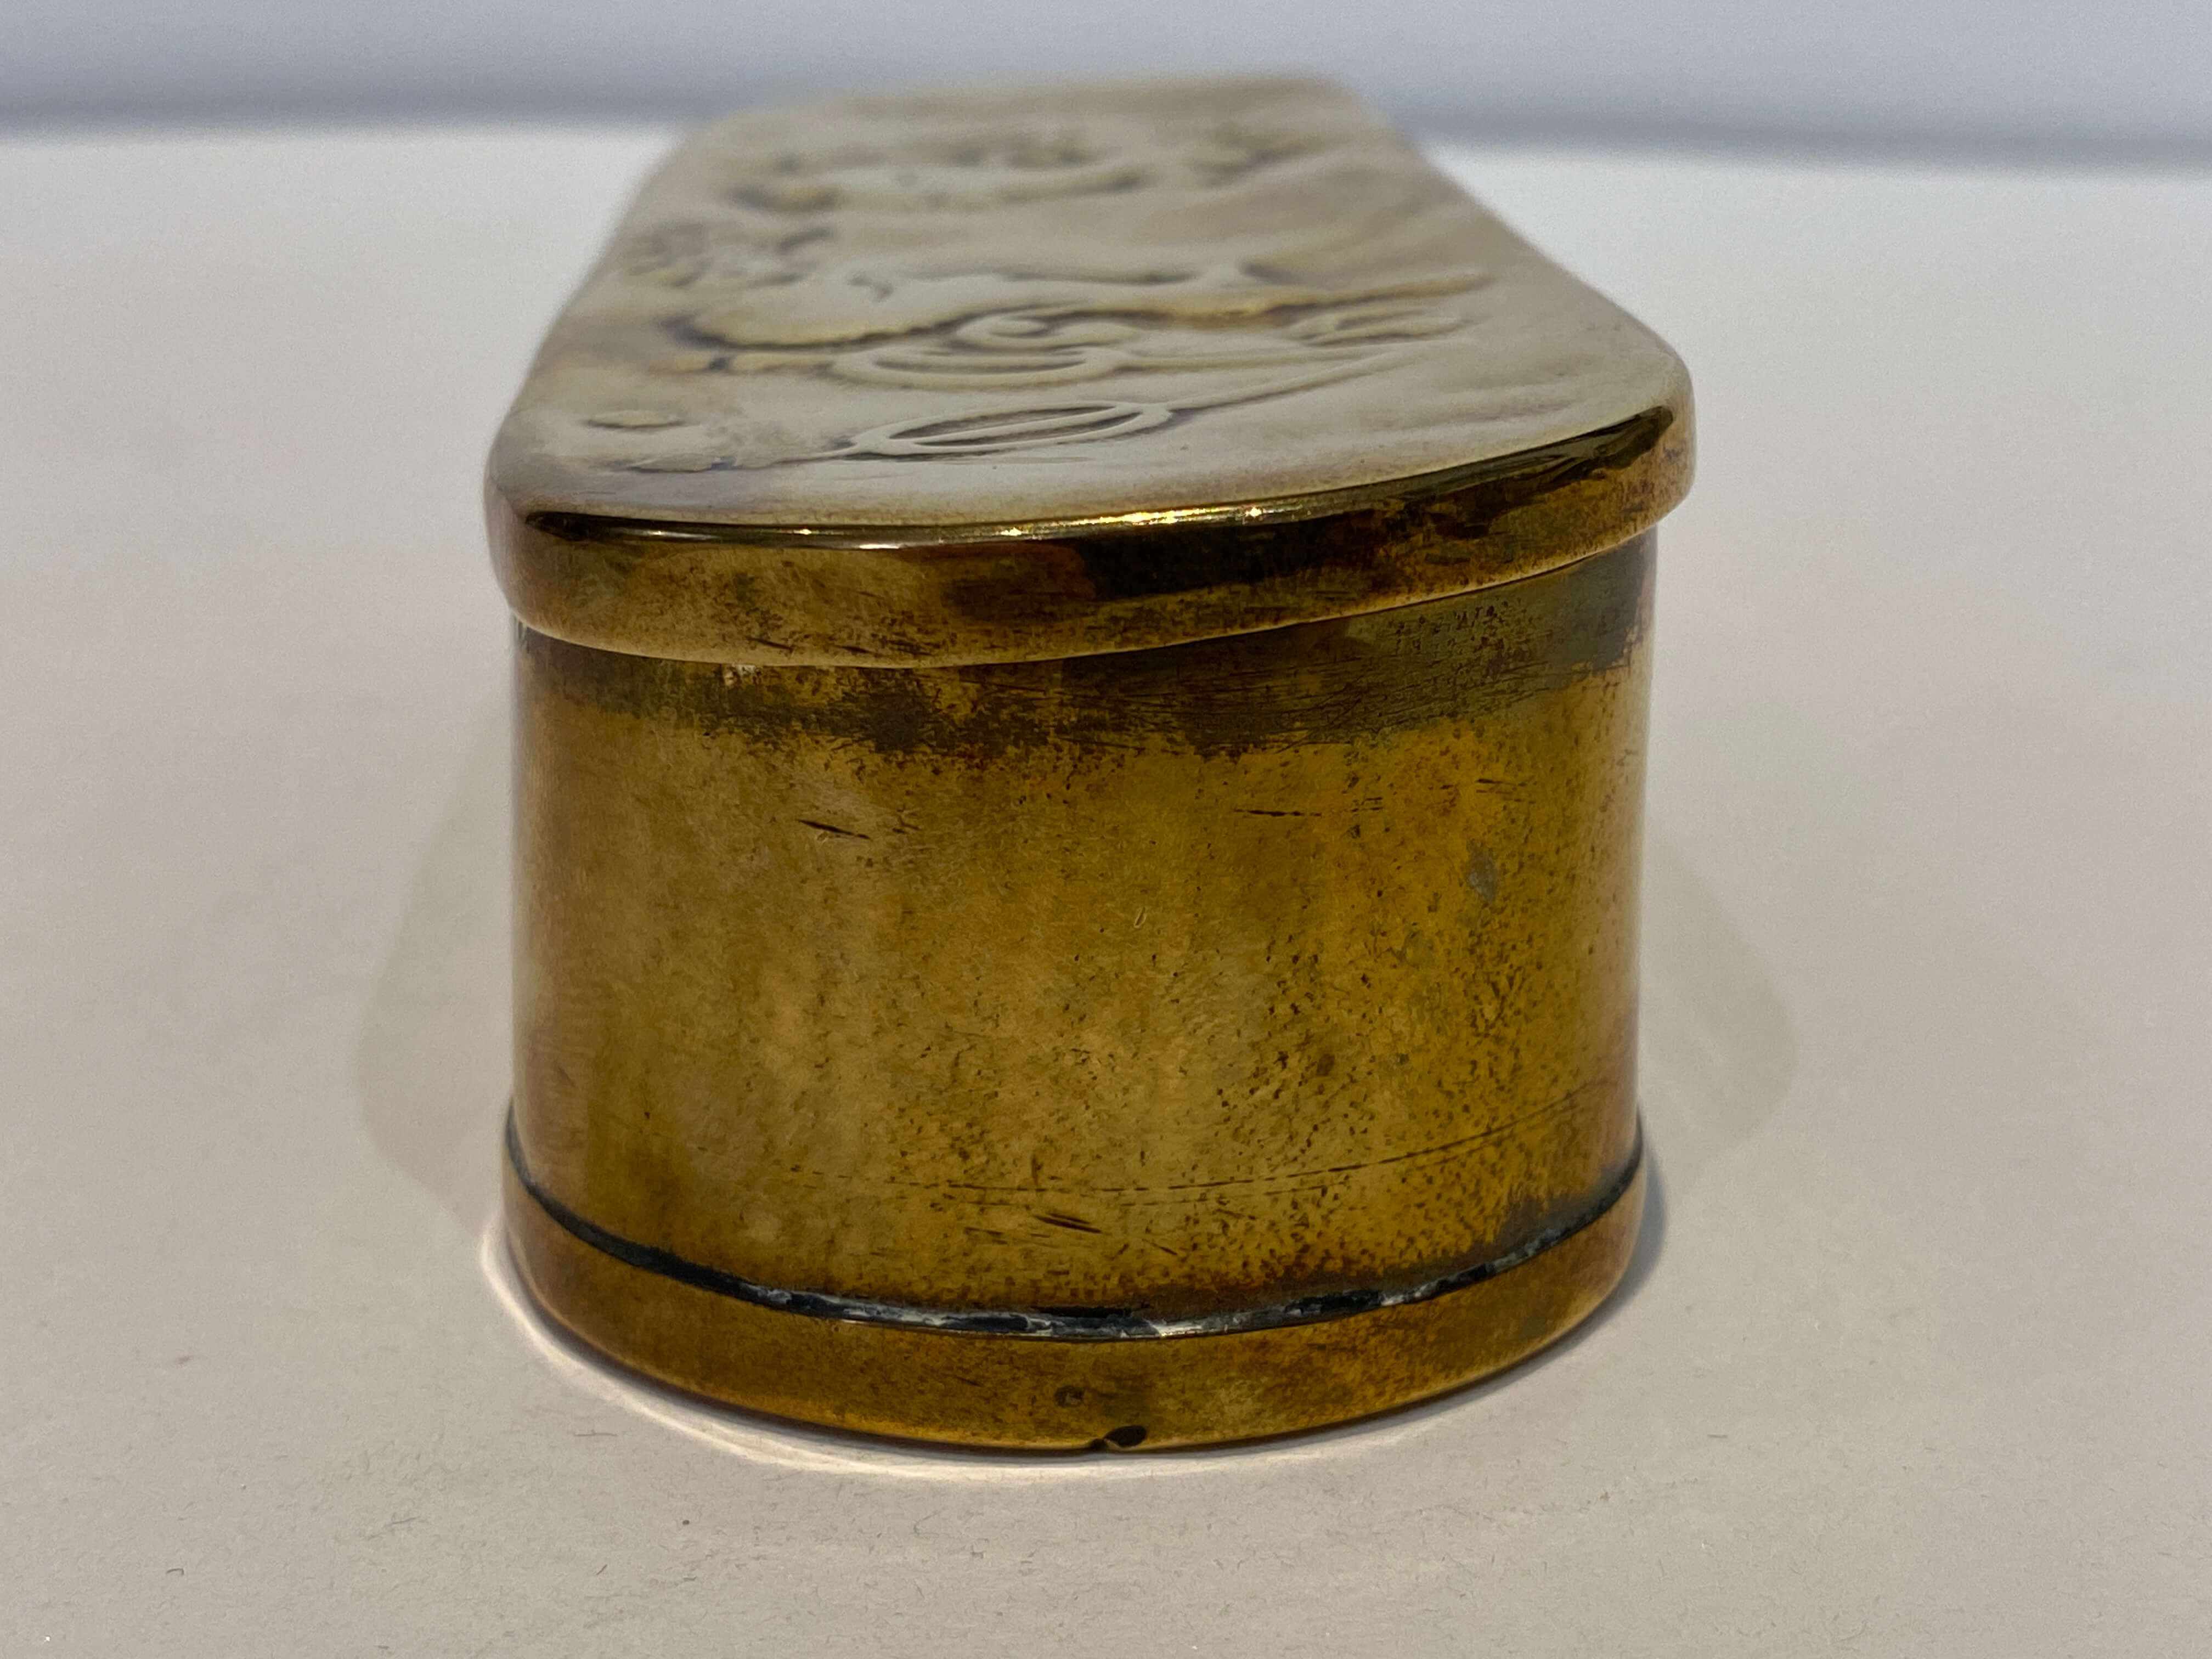 A Dutch brass VOC tobacco box, 18th century